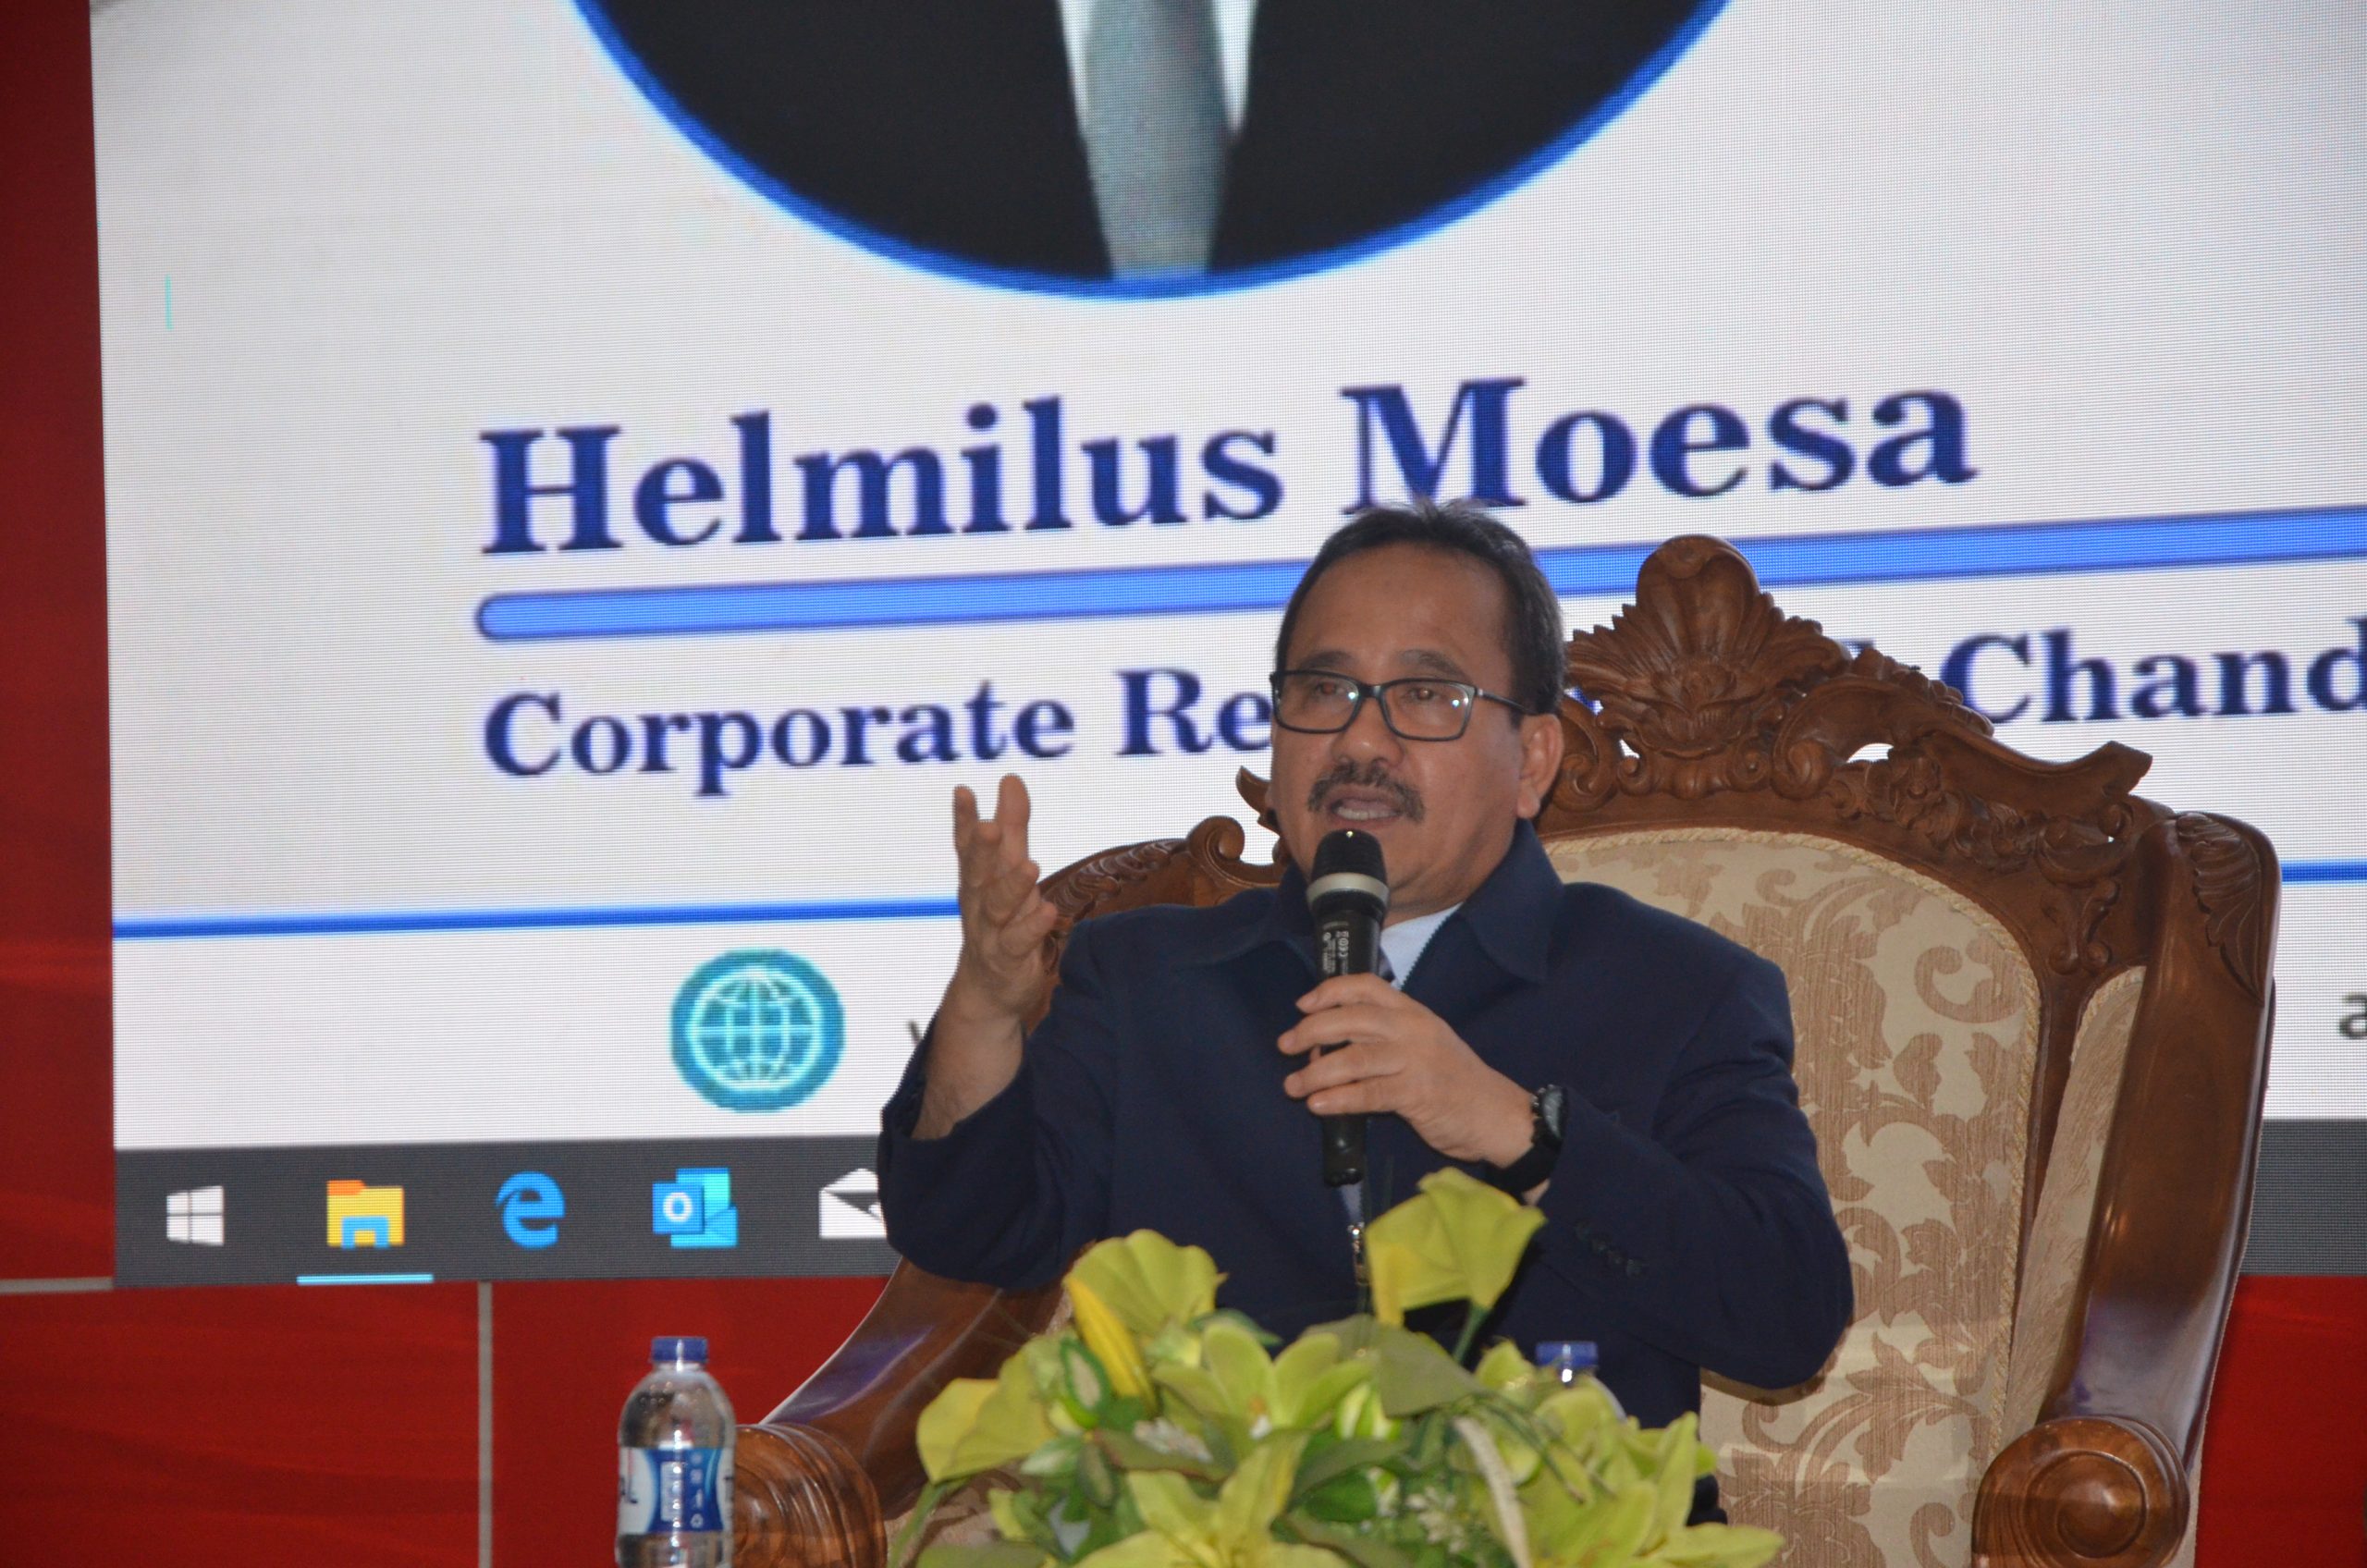 Kuliah Umum Bersama Helmilus Moesa dari Chandra Asih , Februari 2020